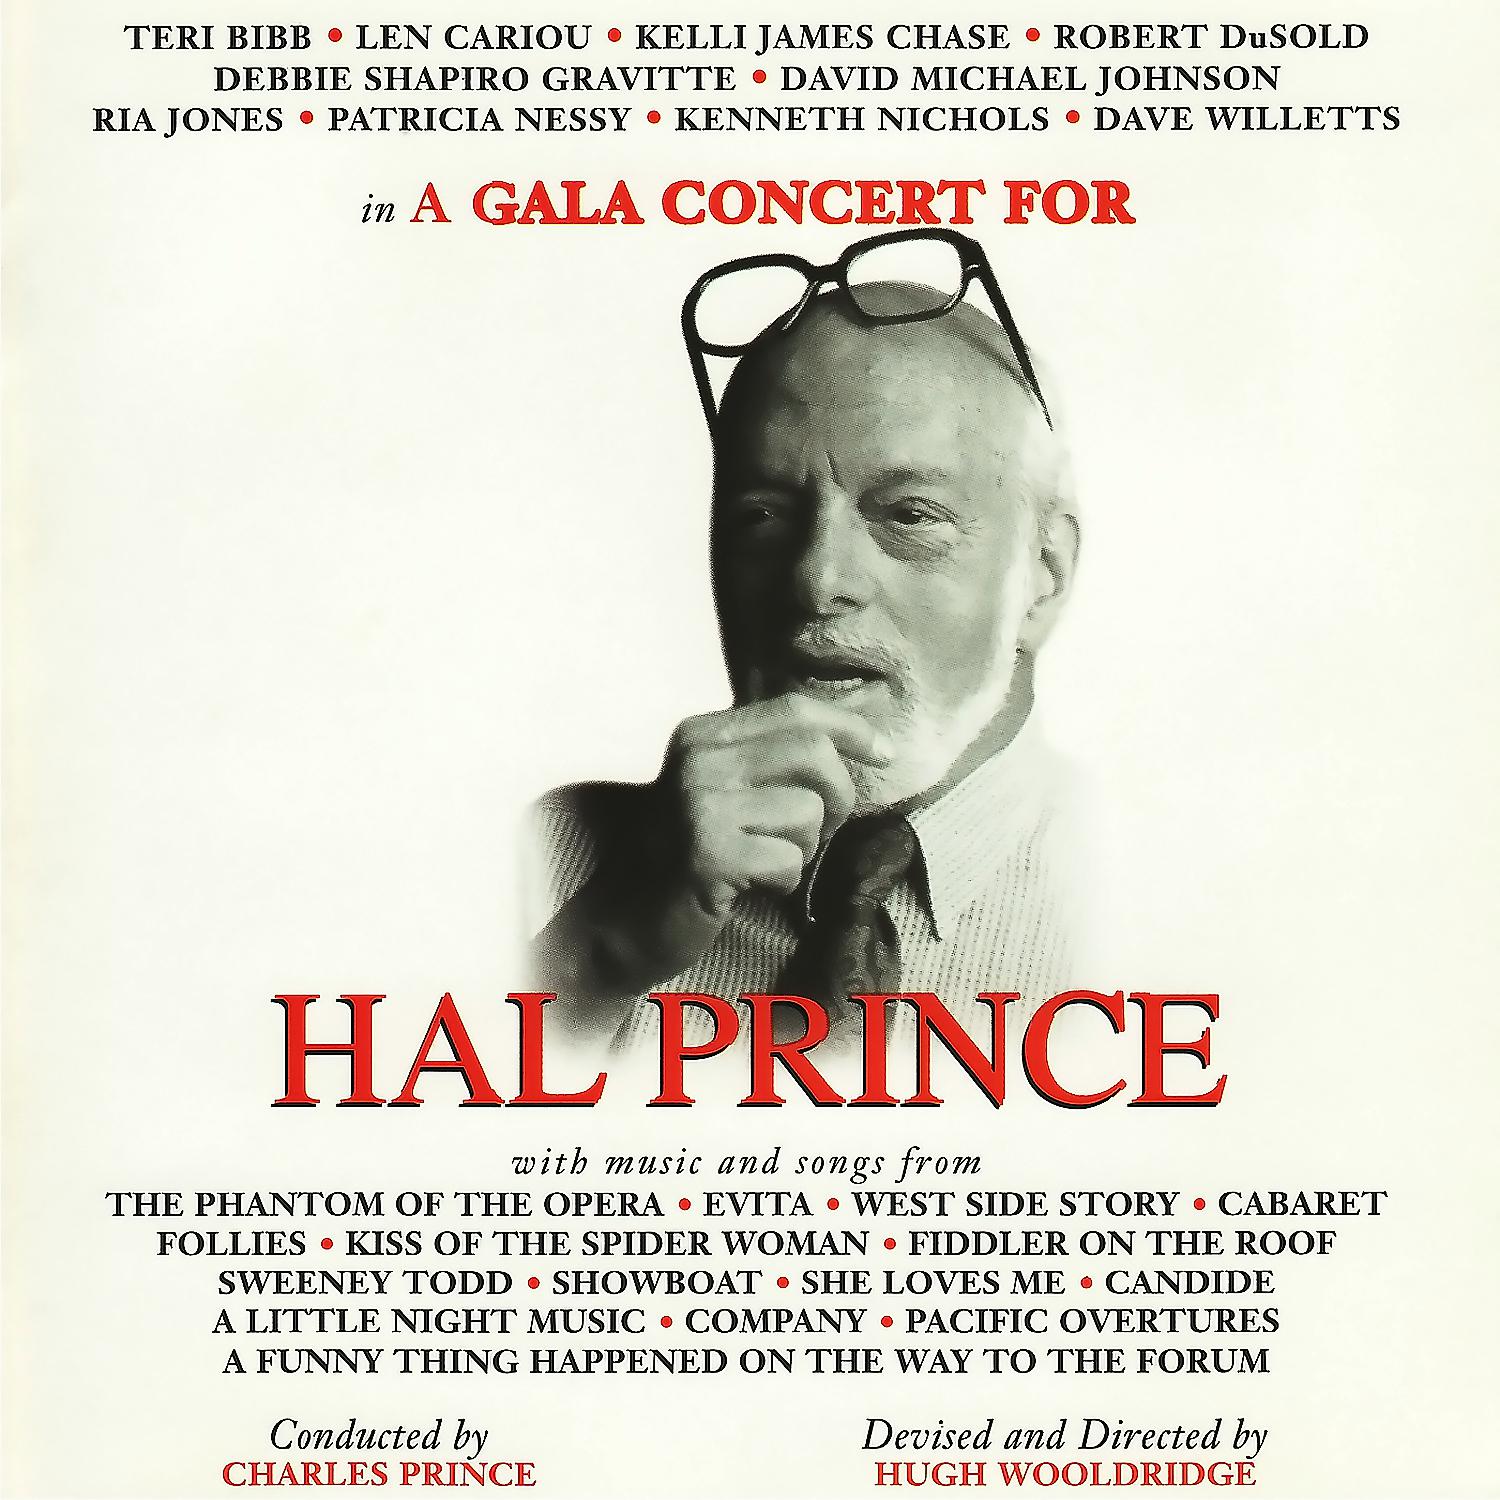 A Gala Concert for Hal Prince